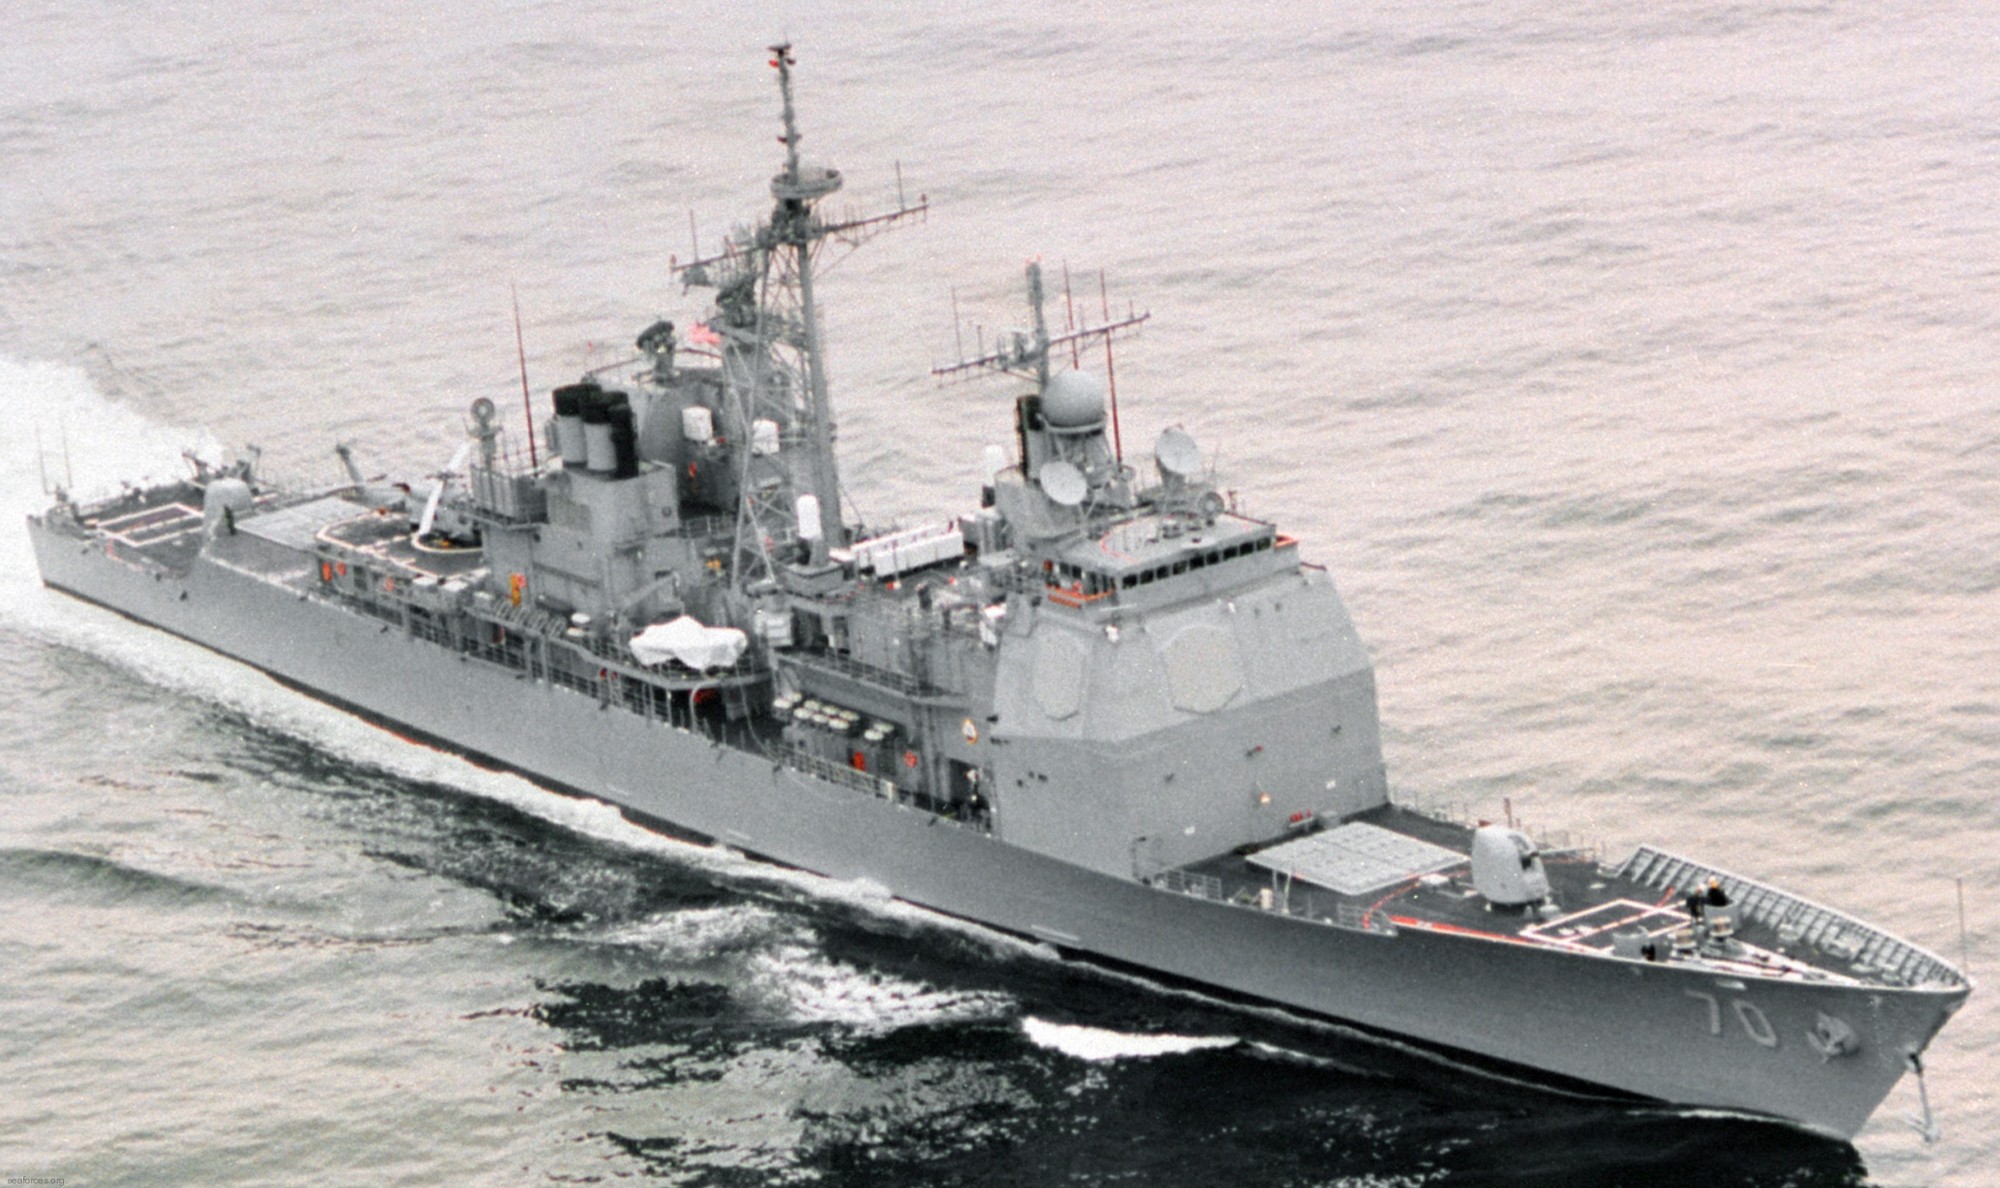 cg-70 uss lake erie ticonderoga class guided missile cruiser navy 83